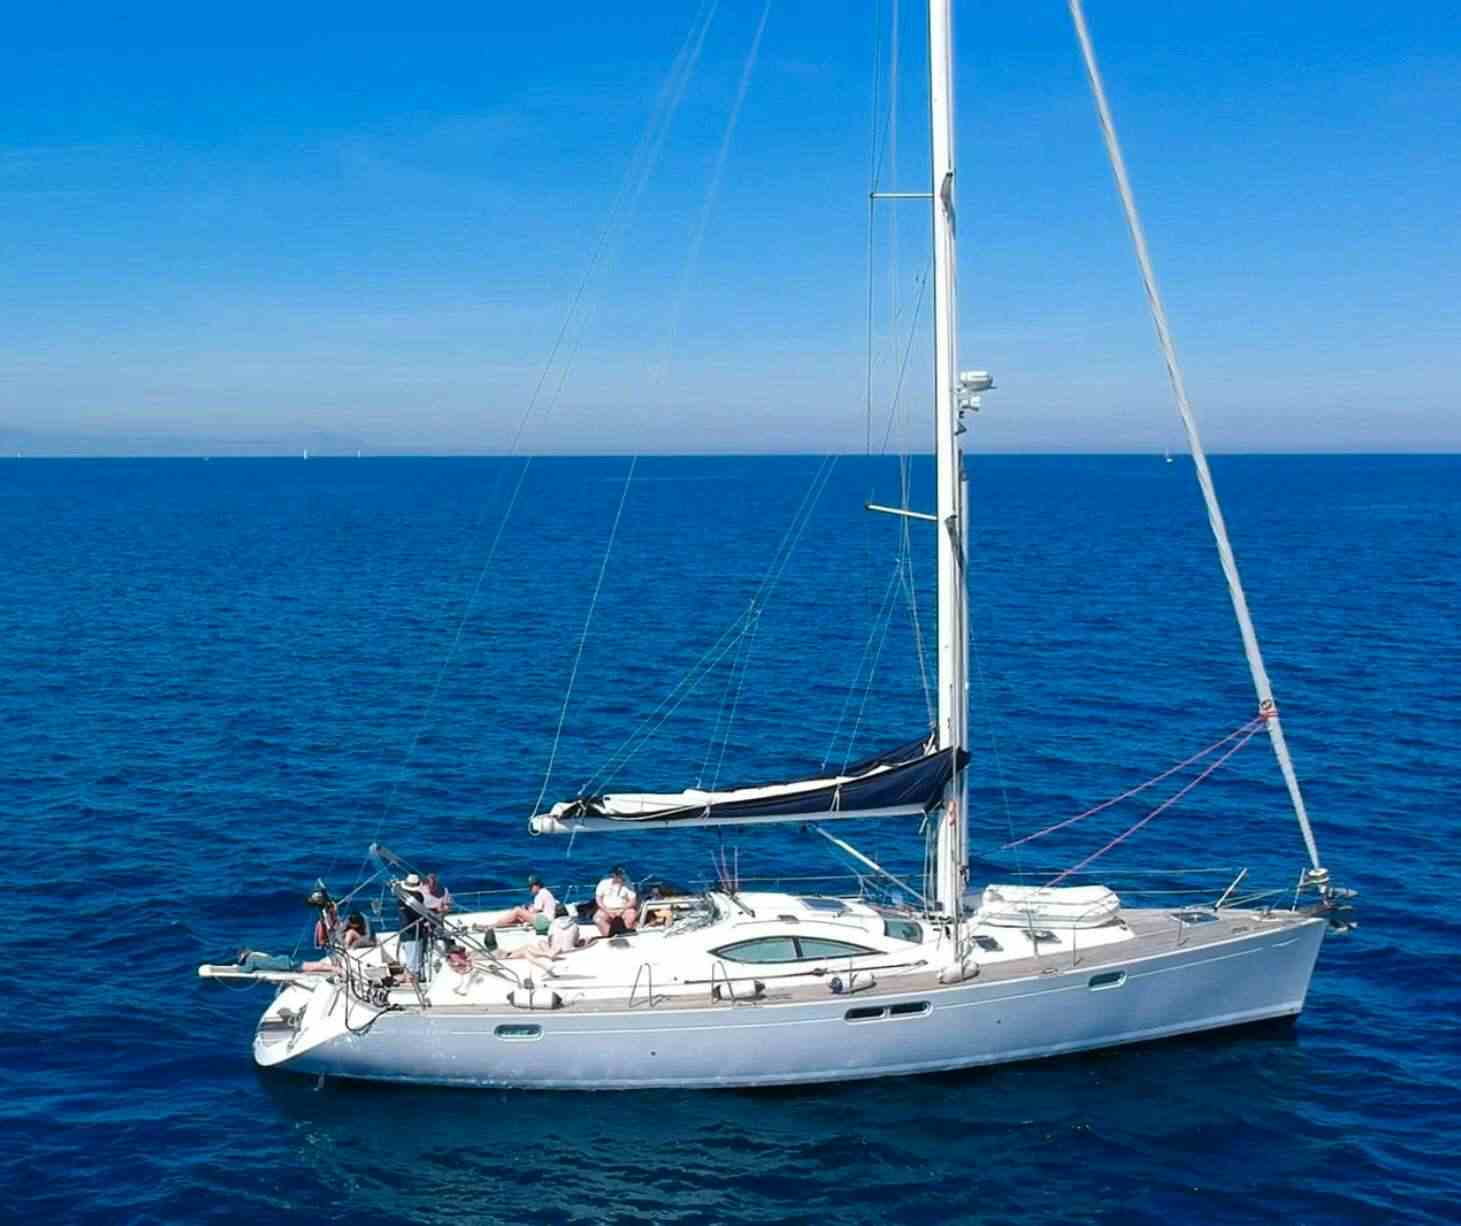 osarracino - Sailboat Charter Spain & Boat hire in Balearics & Spain 1